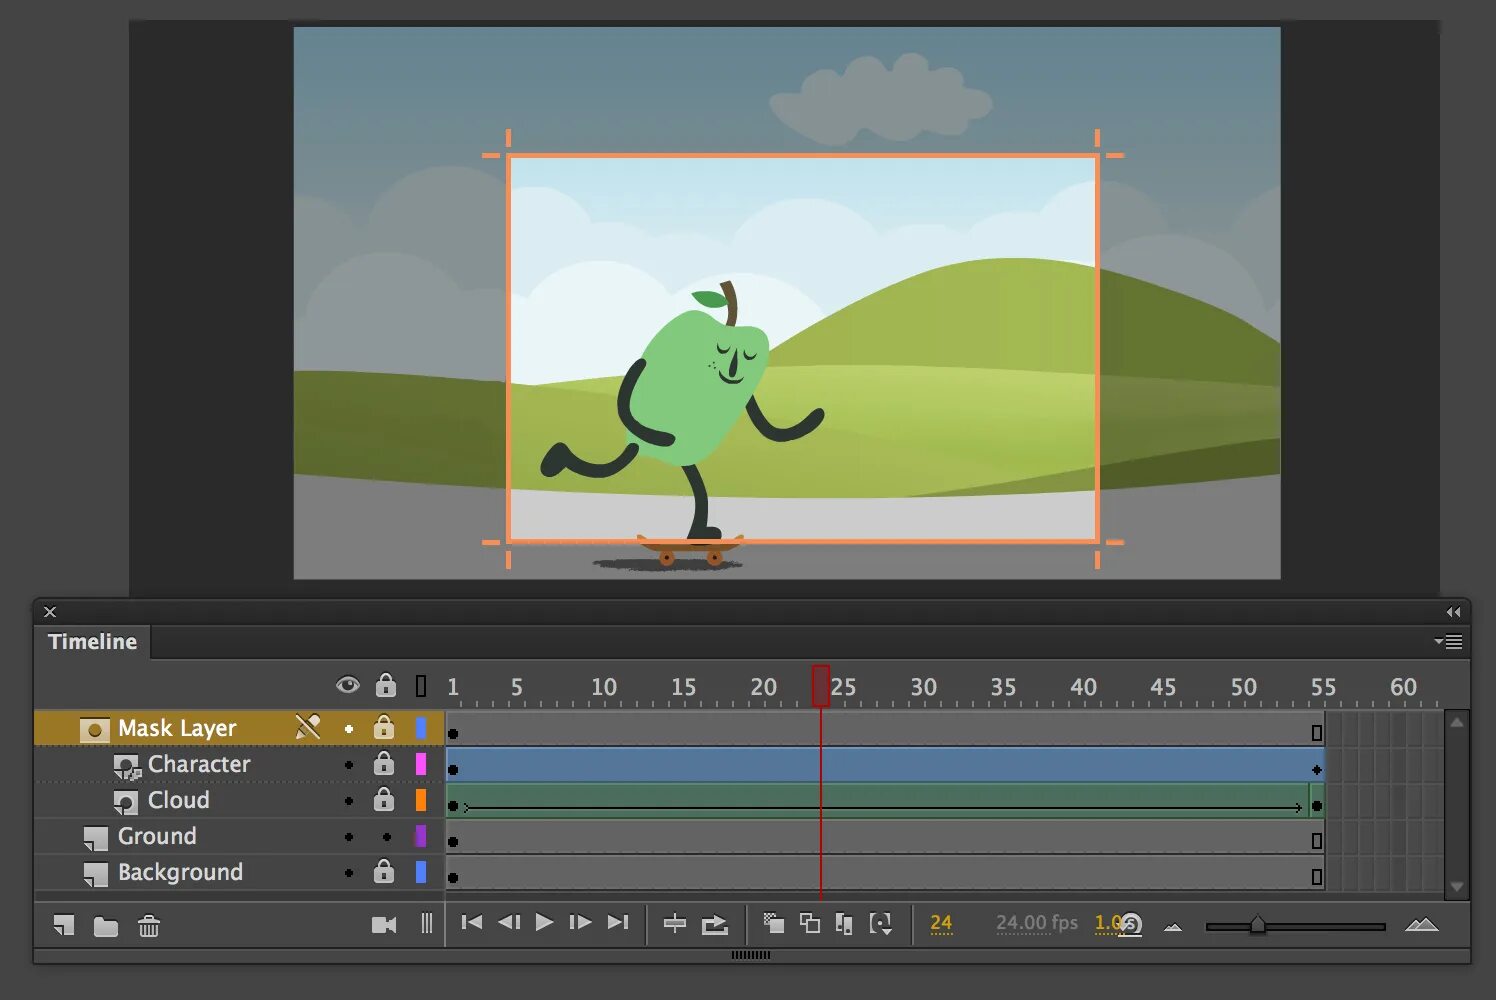 Adobe animate. Adobe animate Интерфейс. Адоб для мультипликации. Adobe анимация.